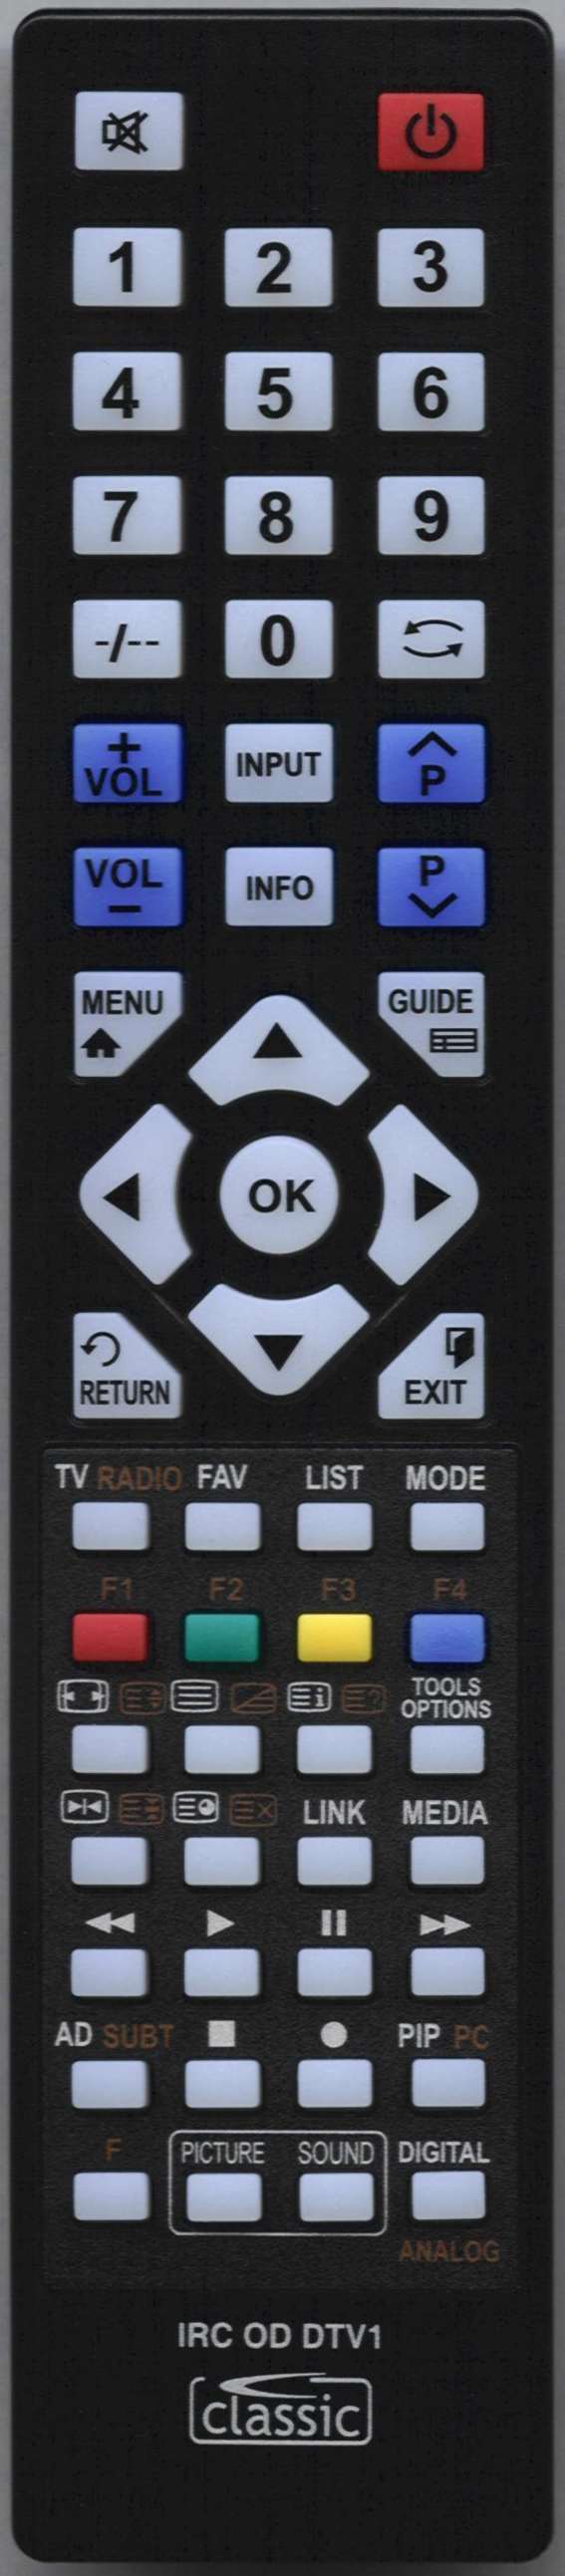 Samsung AA59-00104N Remote Control